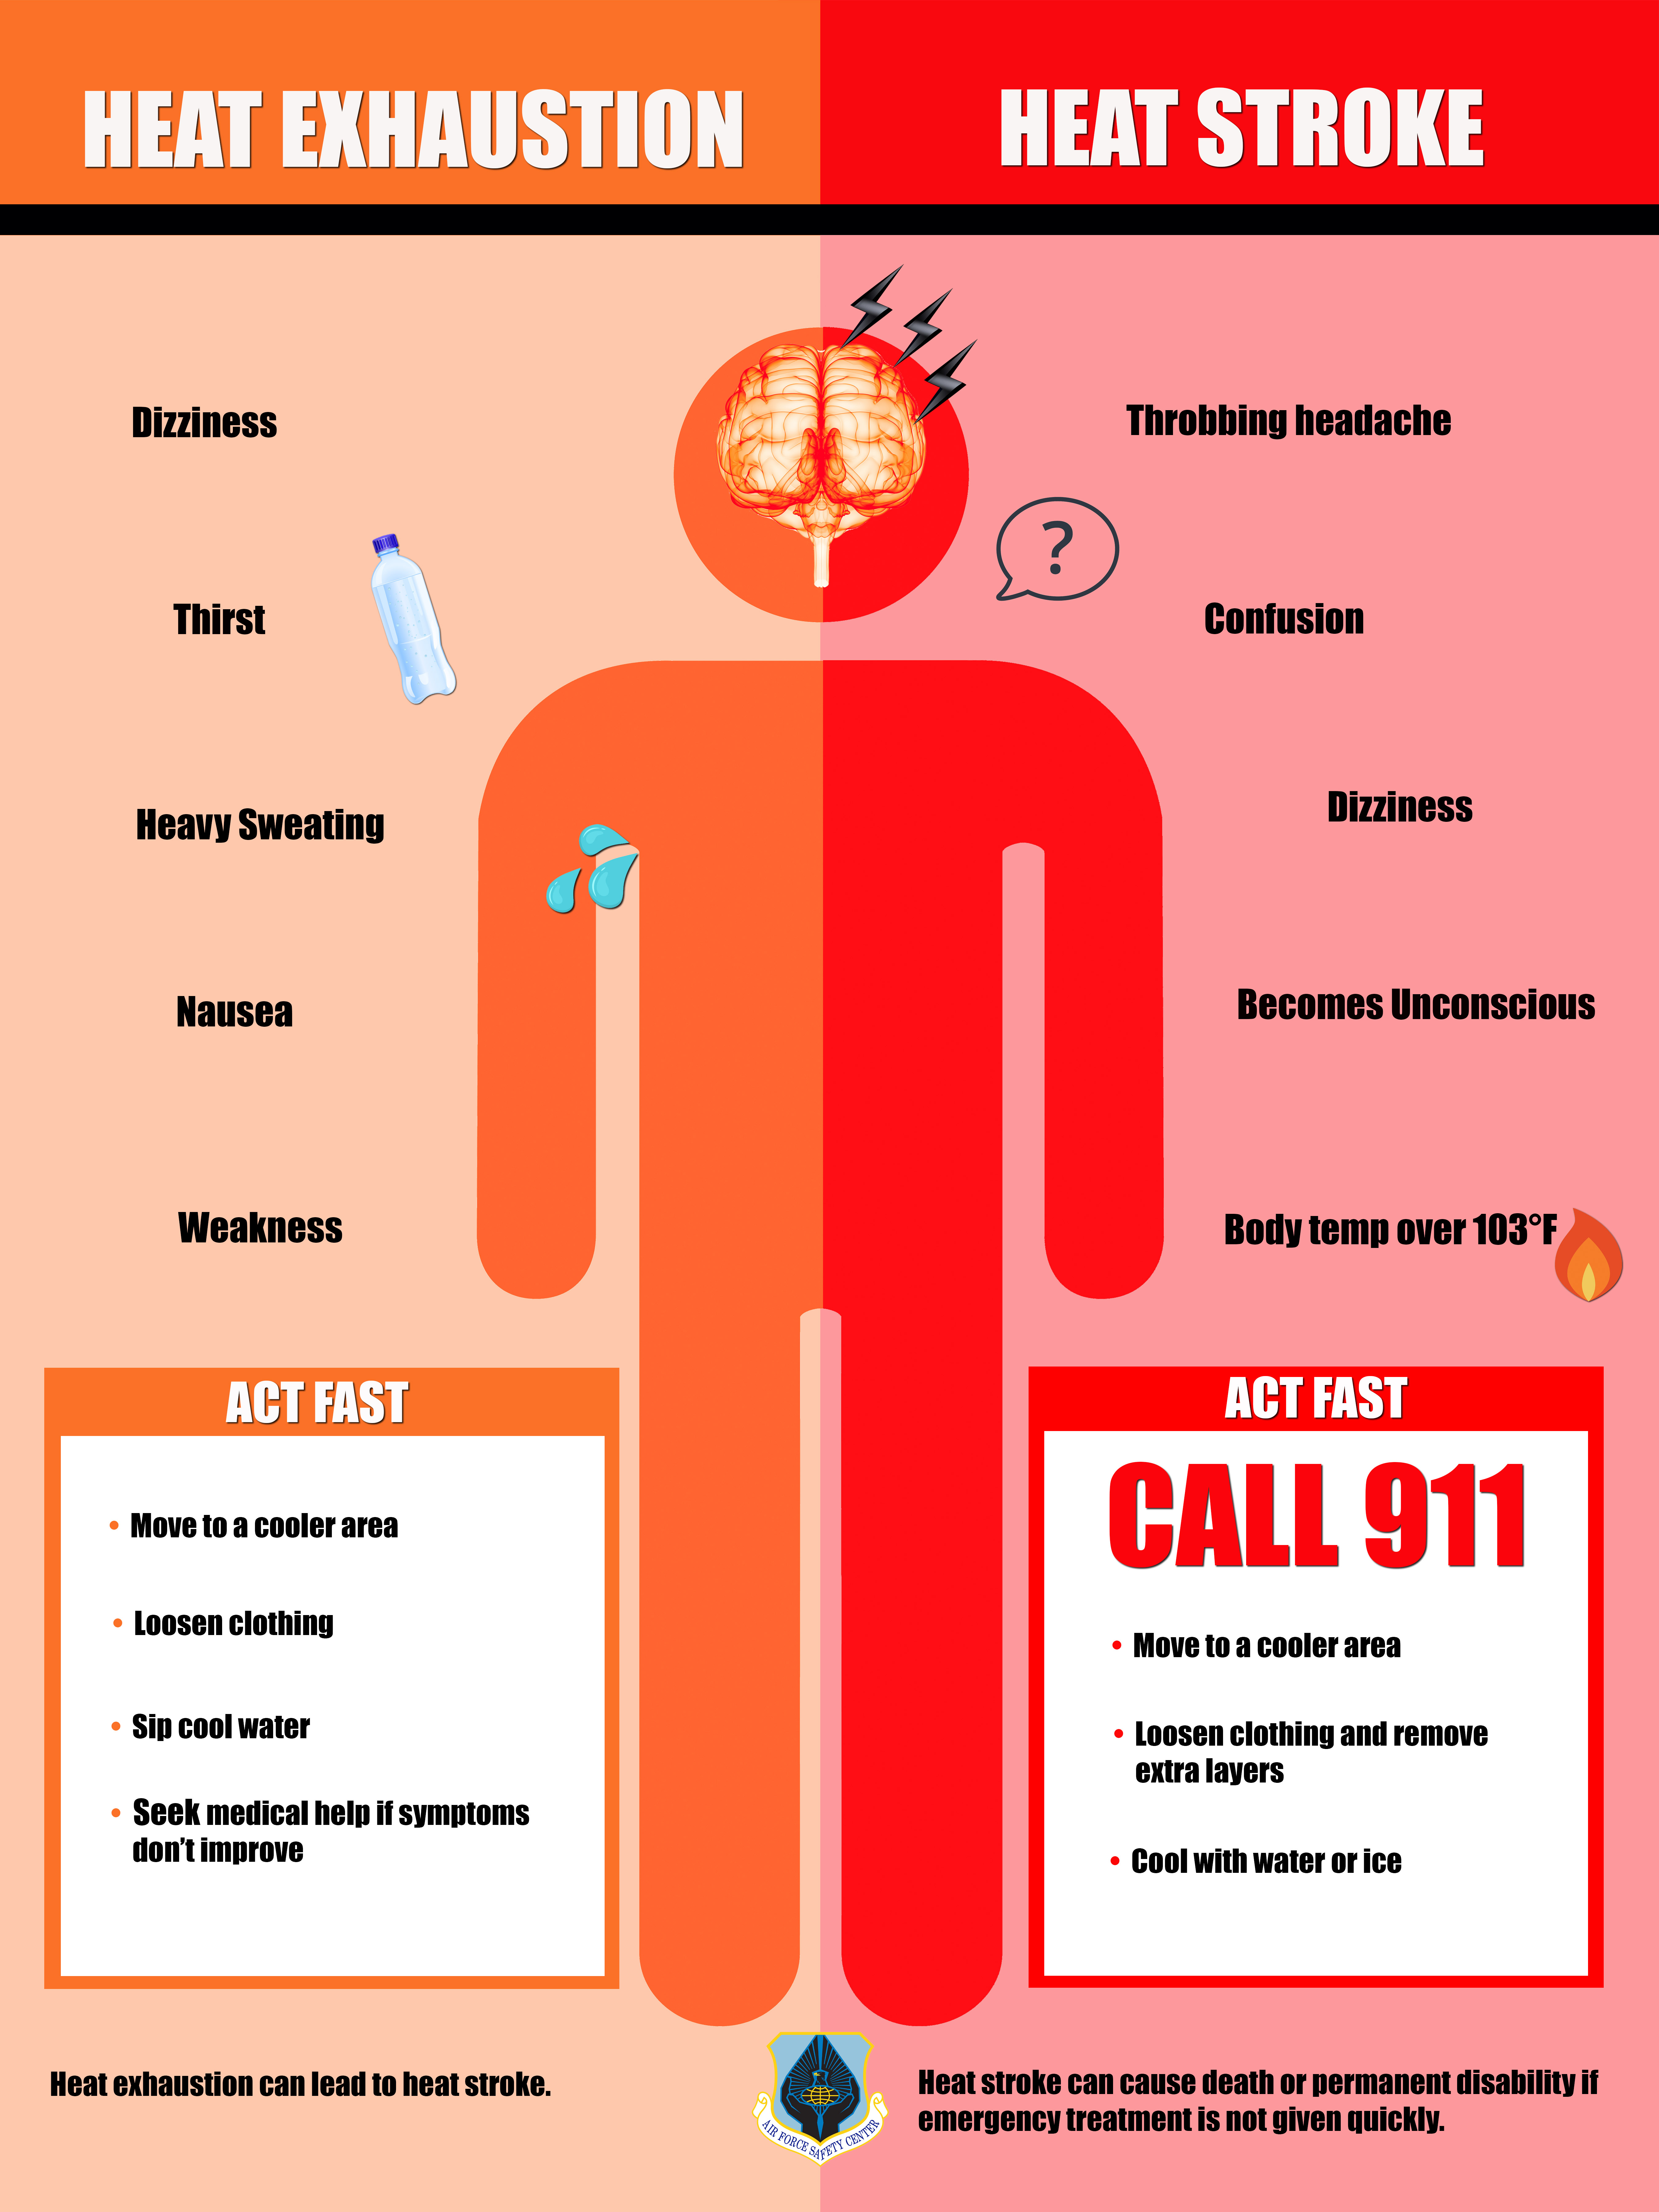 Heat exhaustion/heat stroke infographic showing symptoms.